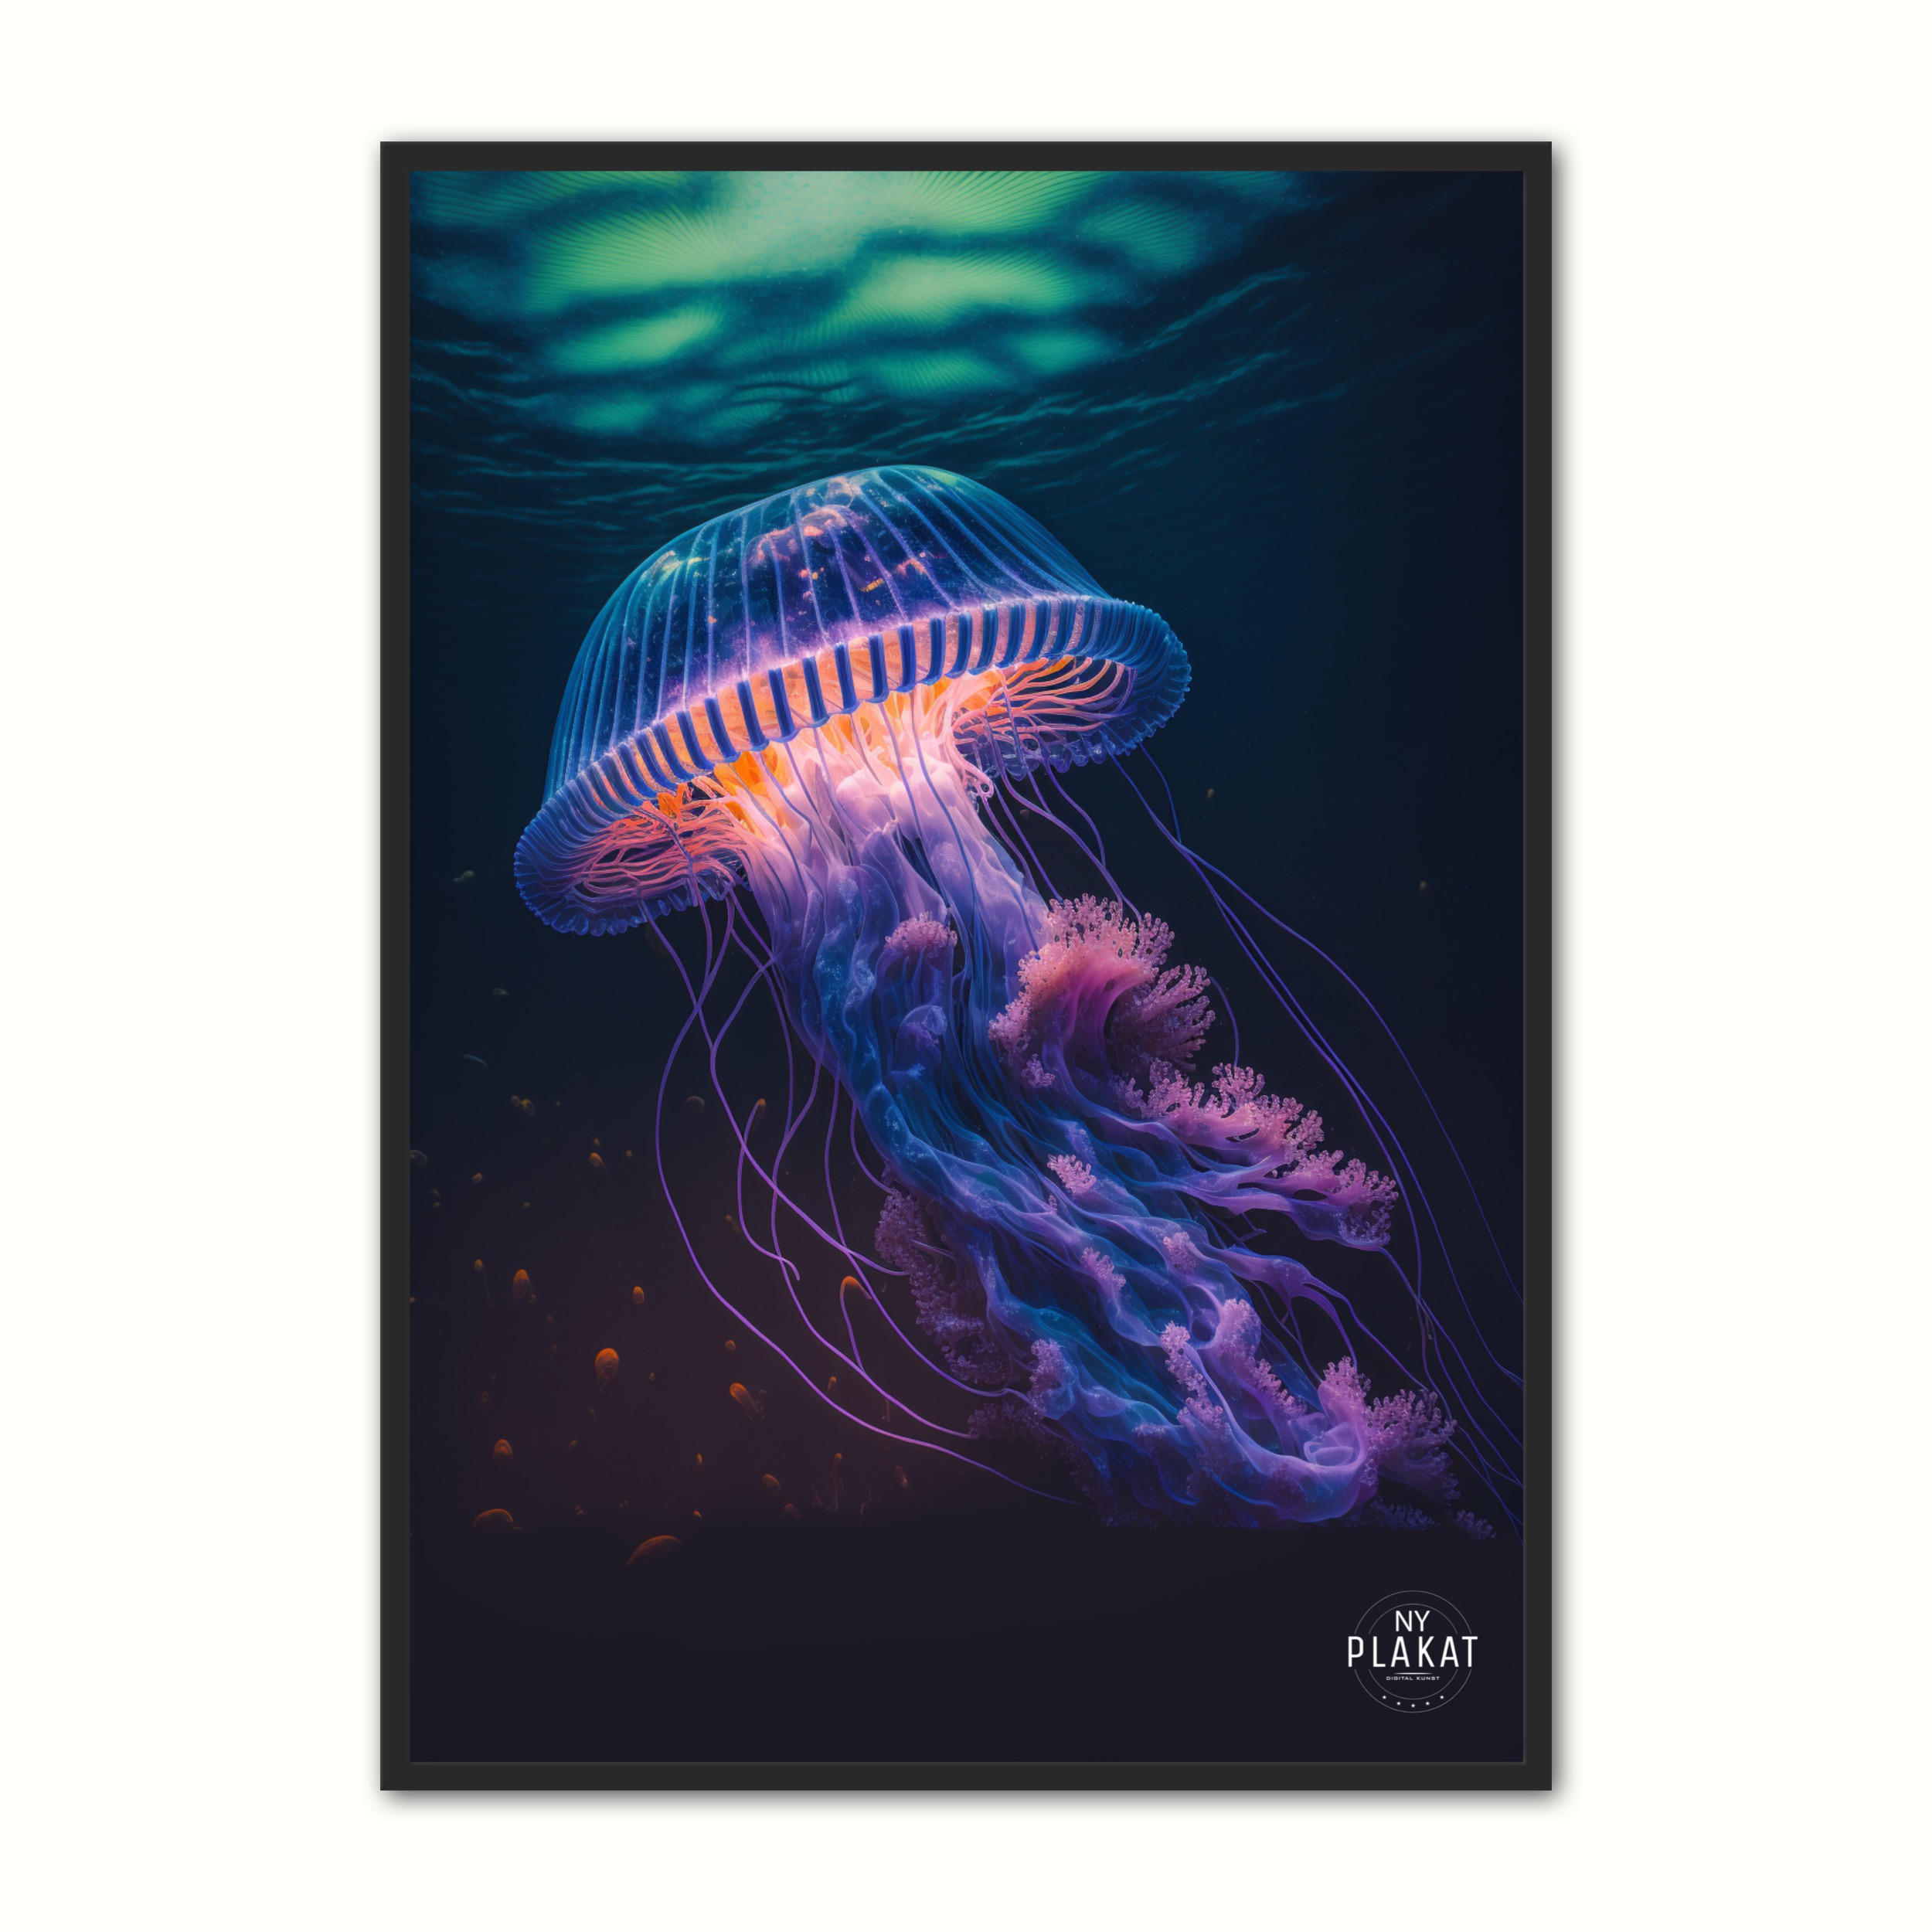 Se Jellyfish plakat No. 2 50 x 70 cm (B2) hos Nyplakat.dk